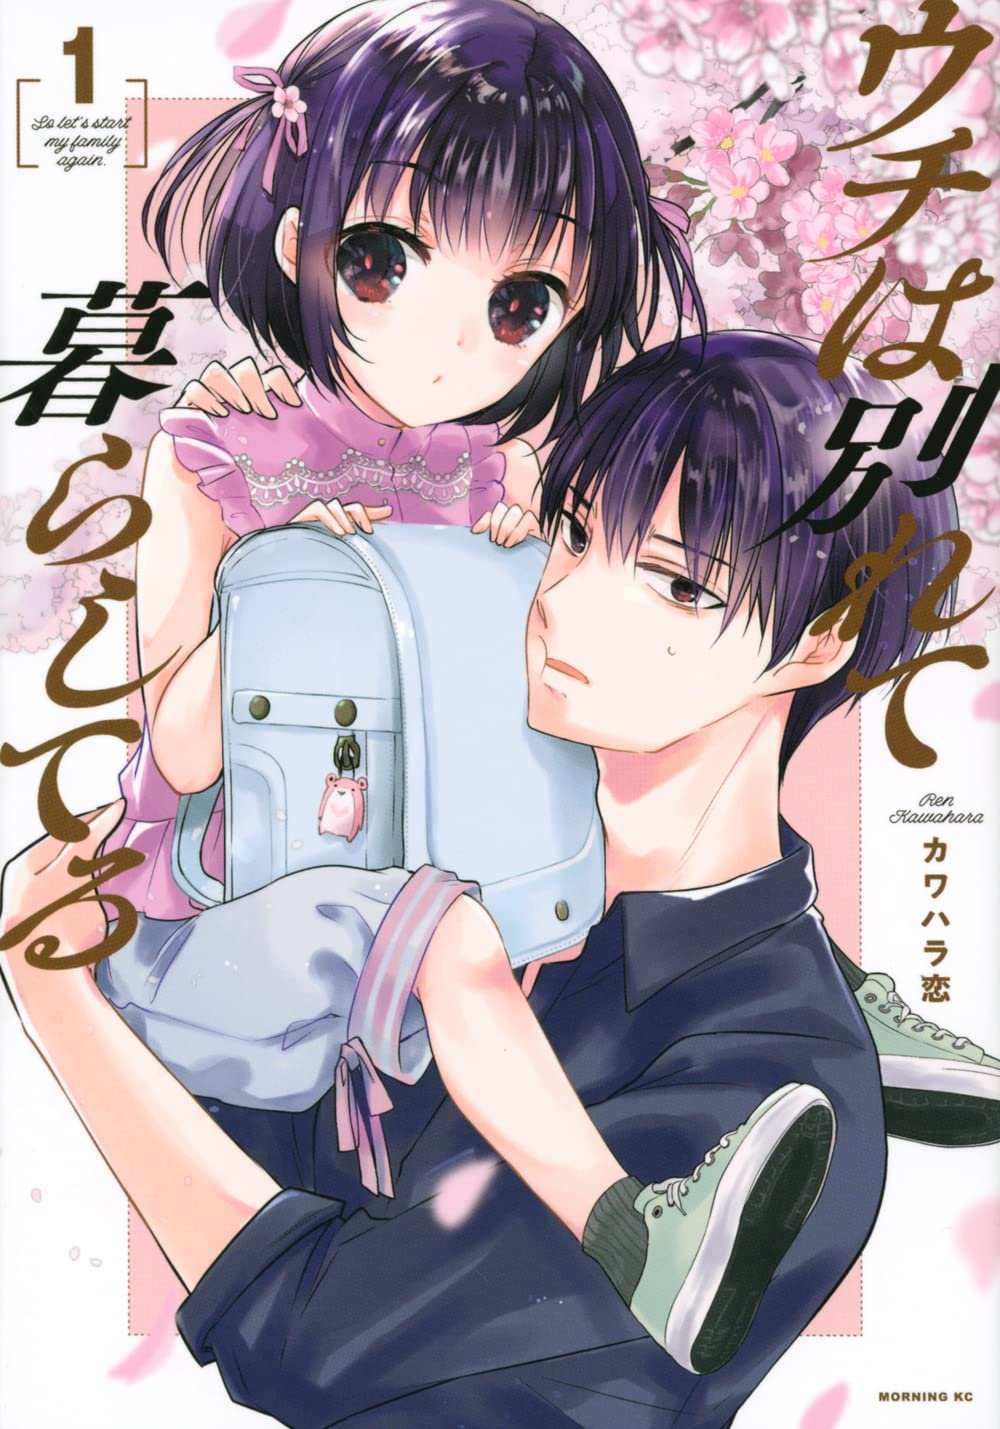 Manga Mogura RE (Manga & Anime News) on X: Uchi wa wakarete kurashiteiru  by Kawahara Ren will reach its story climax in upcoming Morning Two issue  9/2022 out July 22 Volume 3